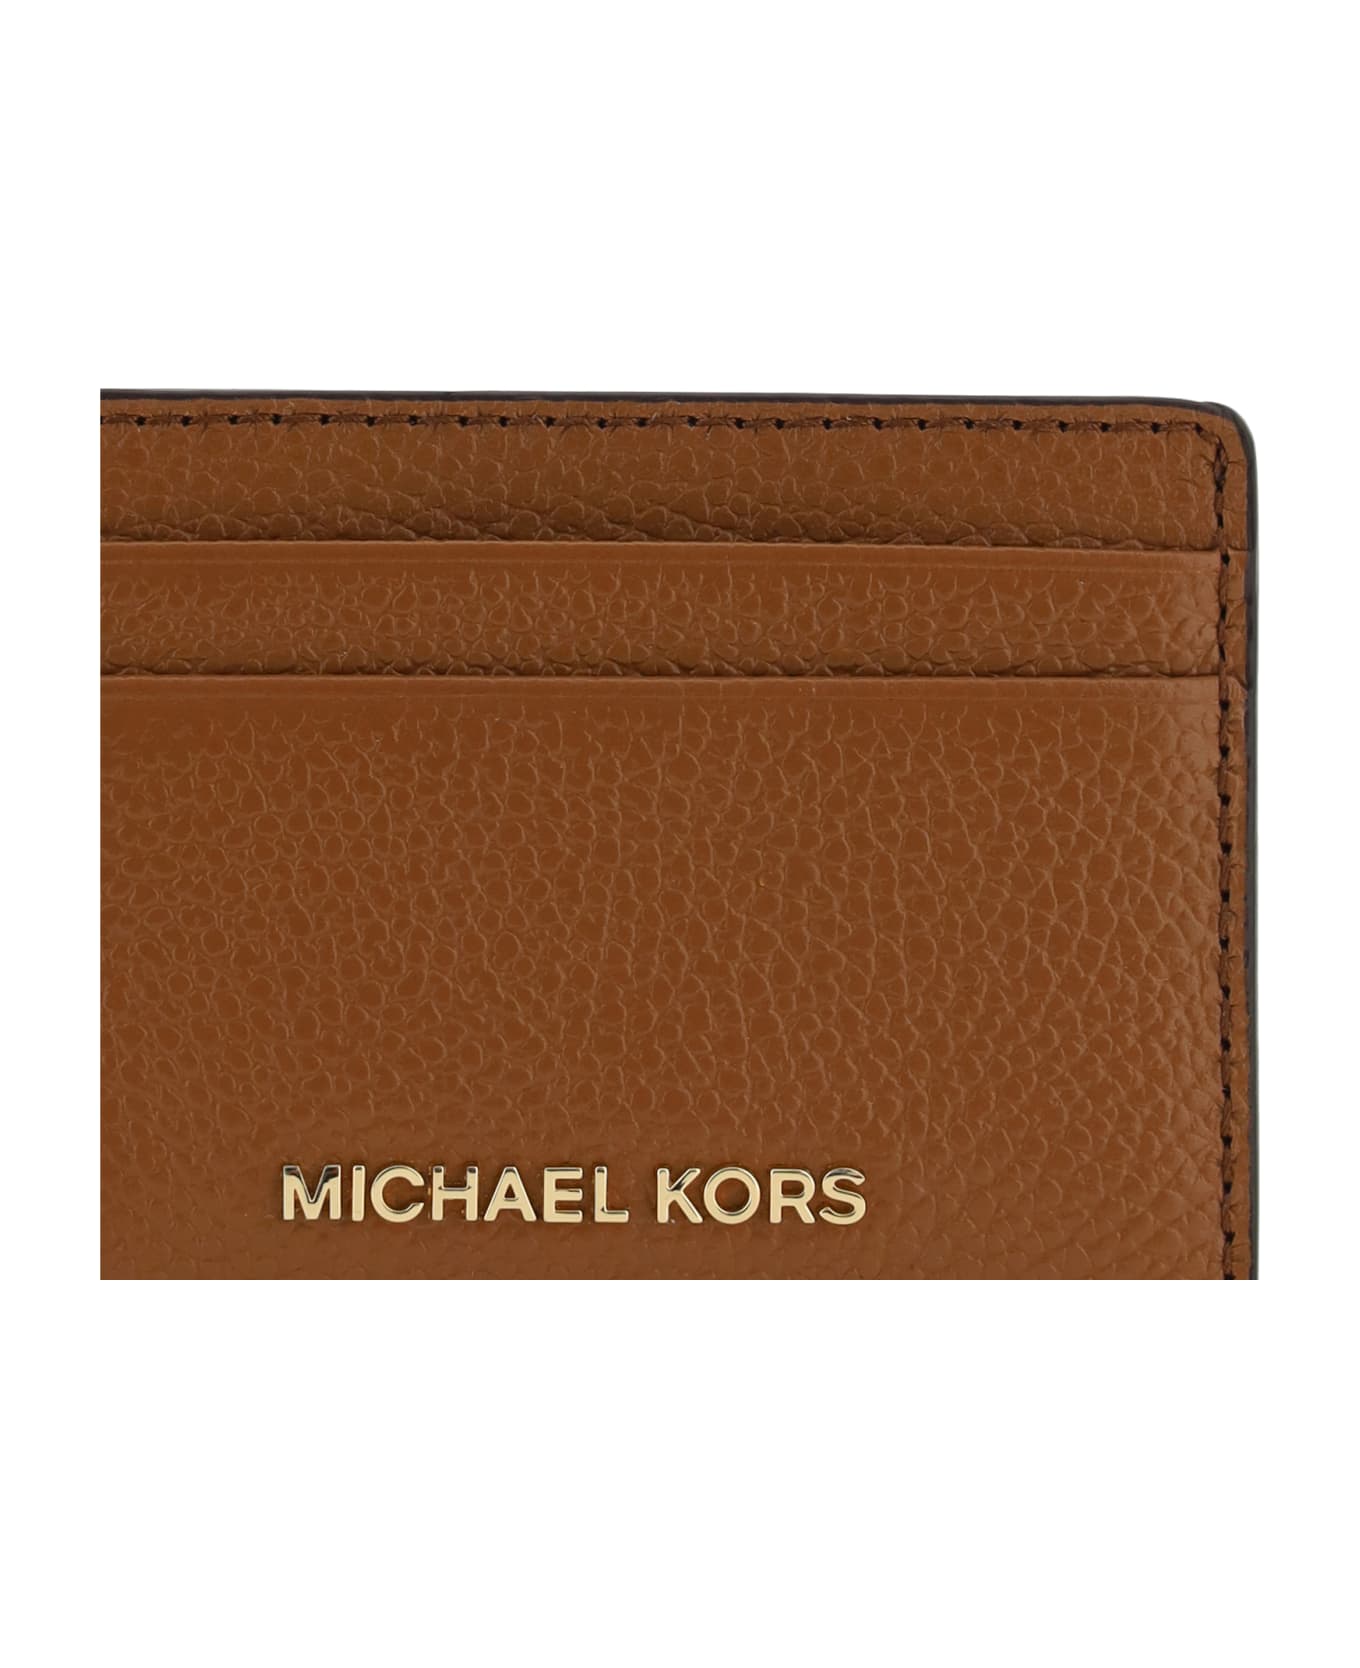 Michael Kors Card Holder - Luggage